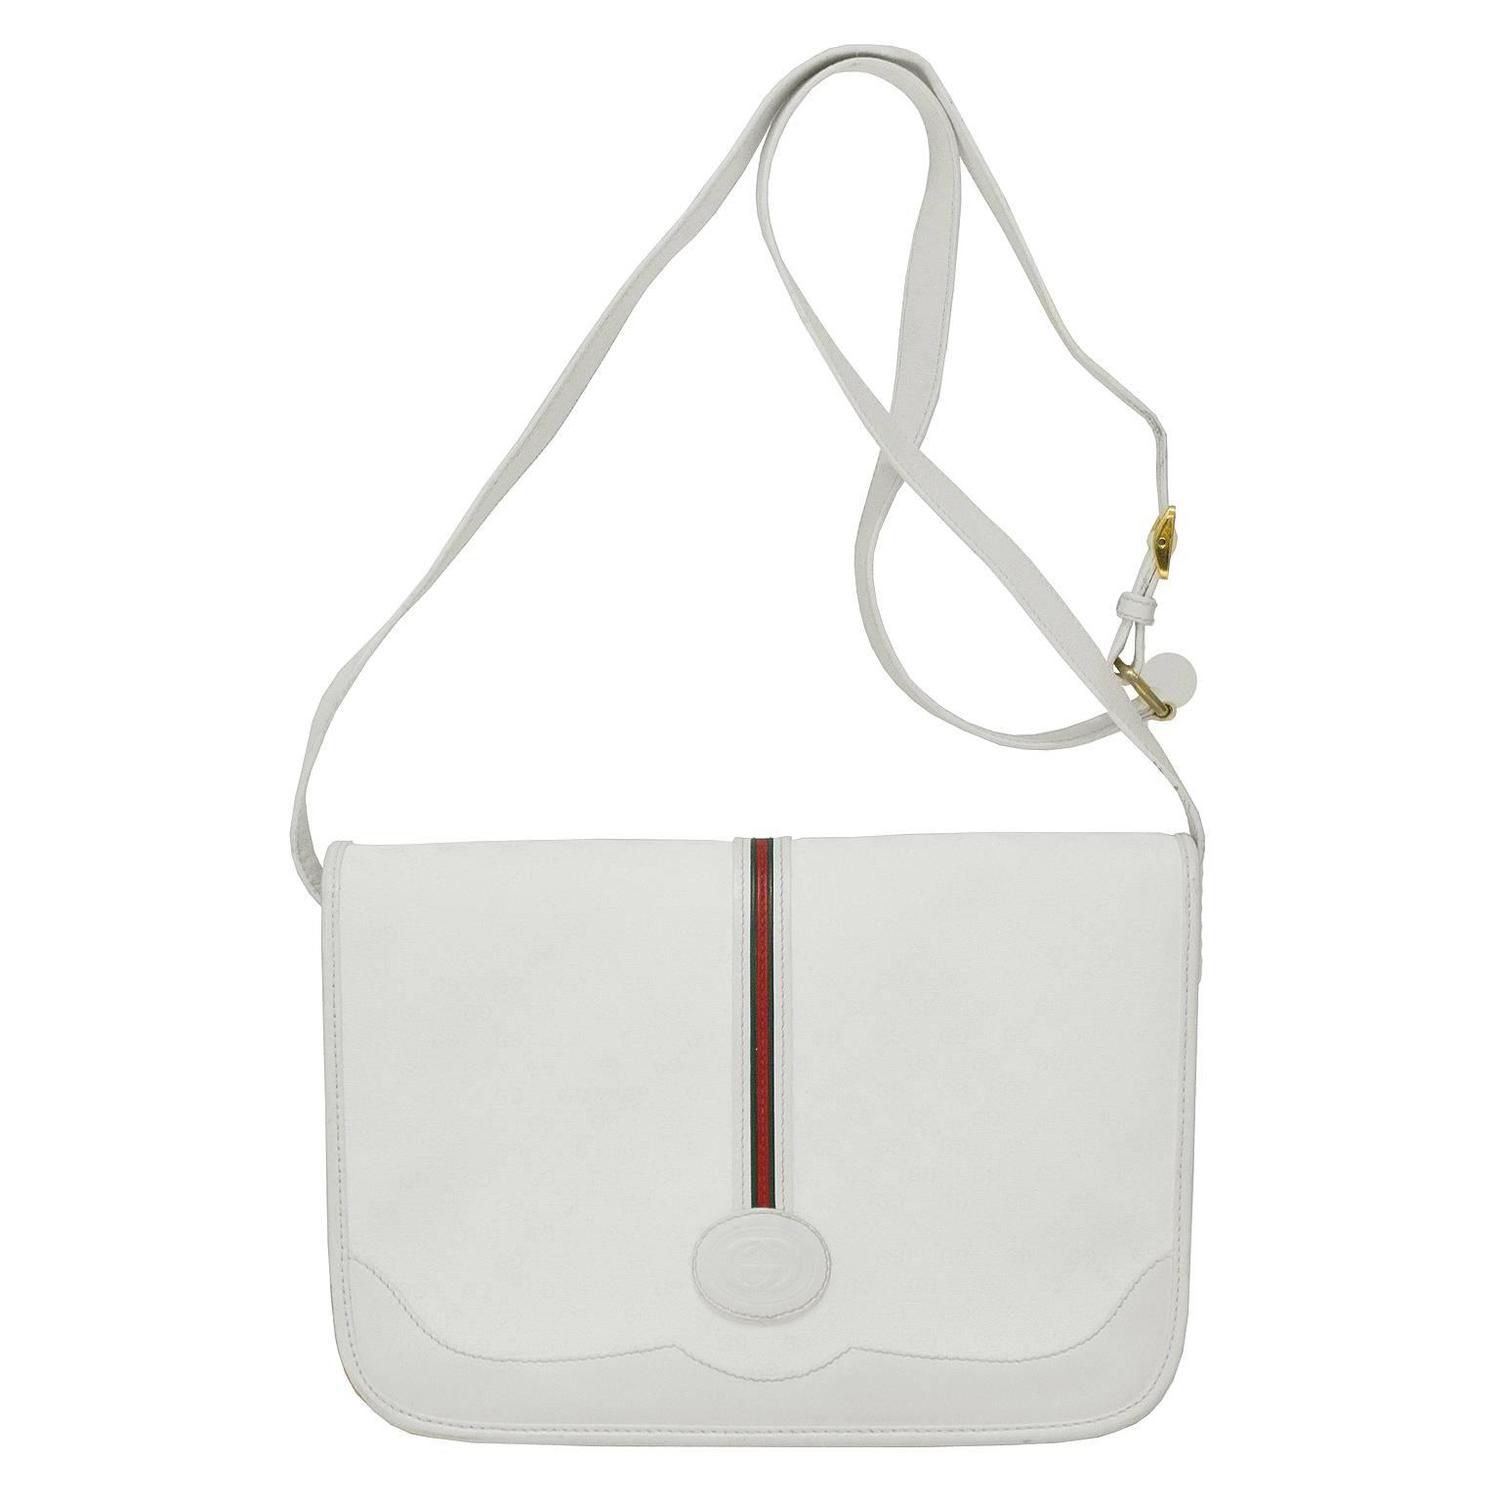 white gucci messenger bag